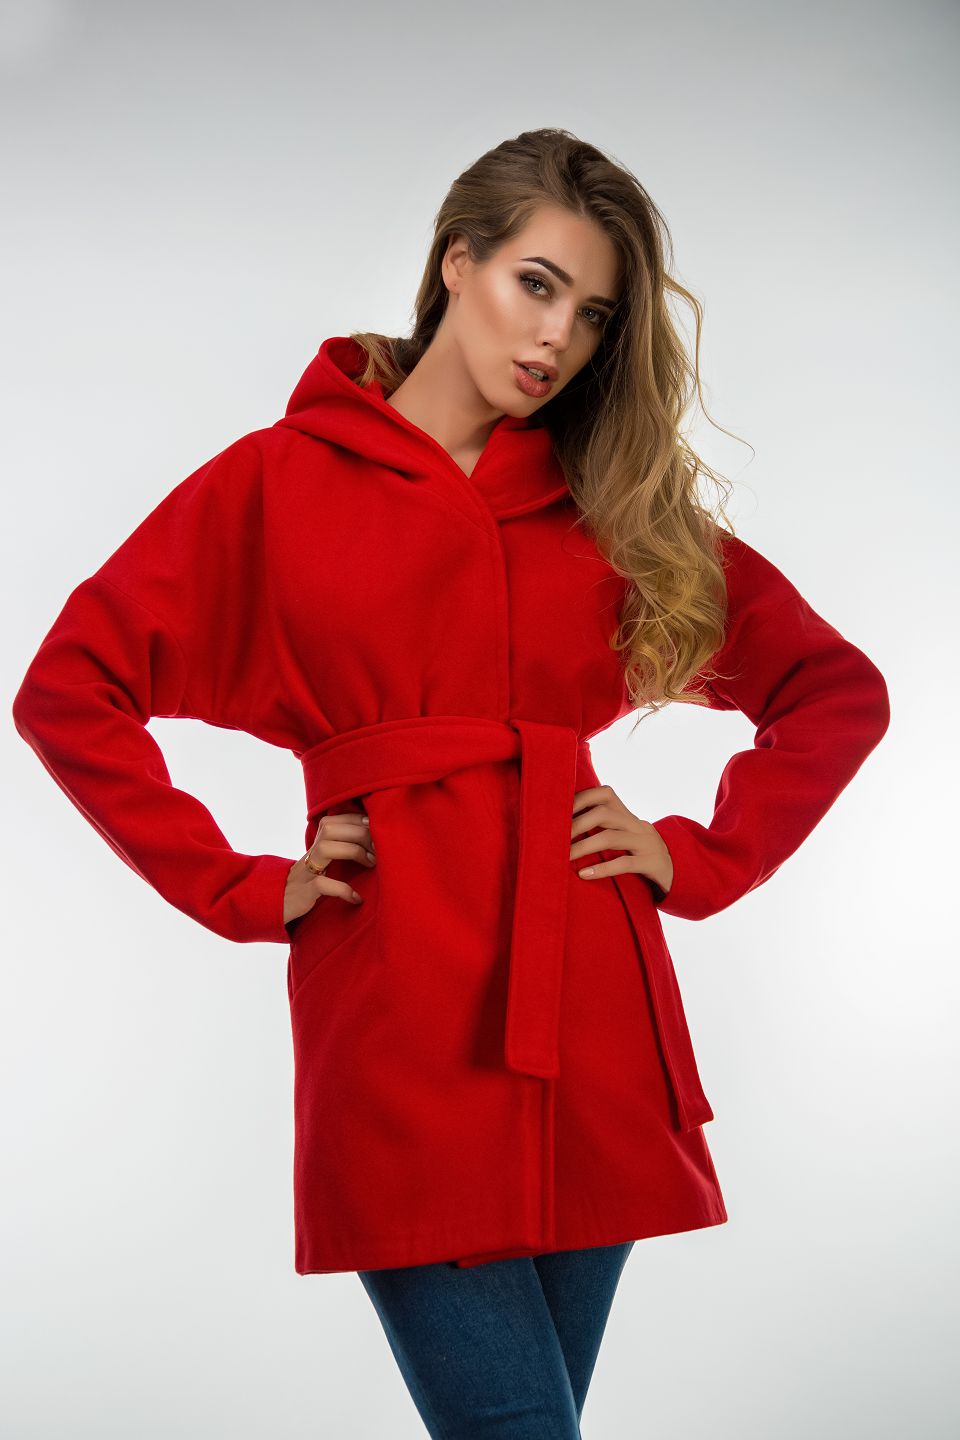 Короткое красное пальто